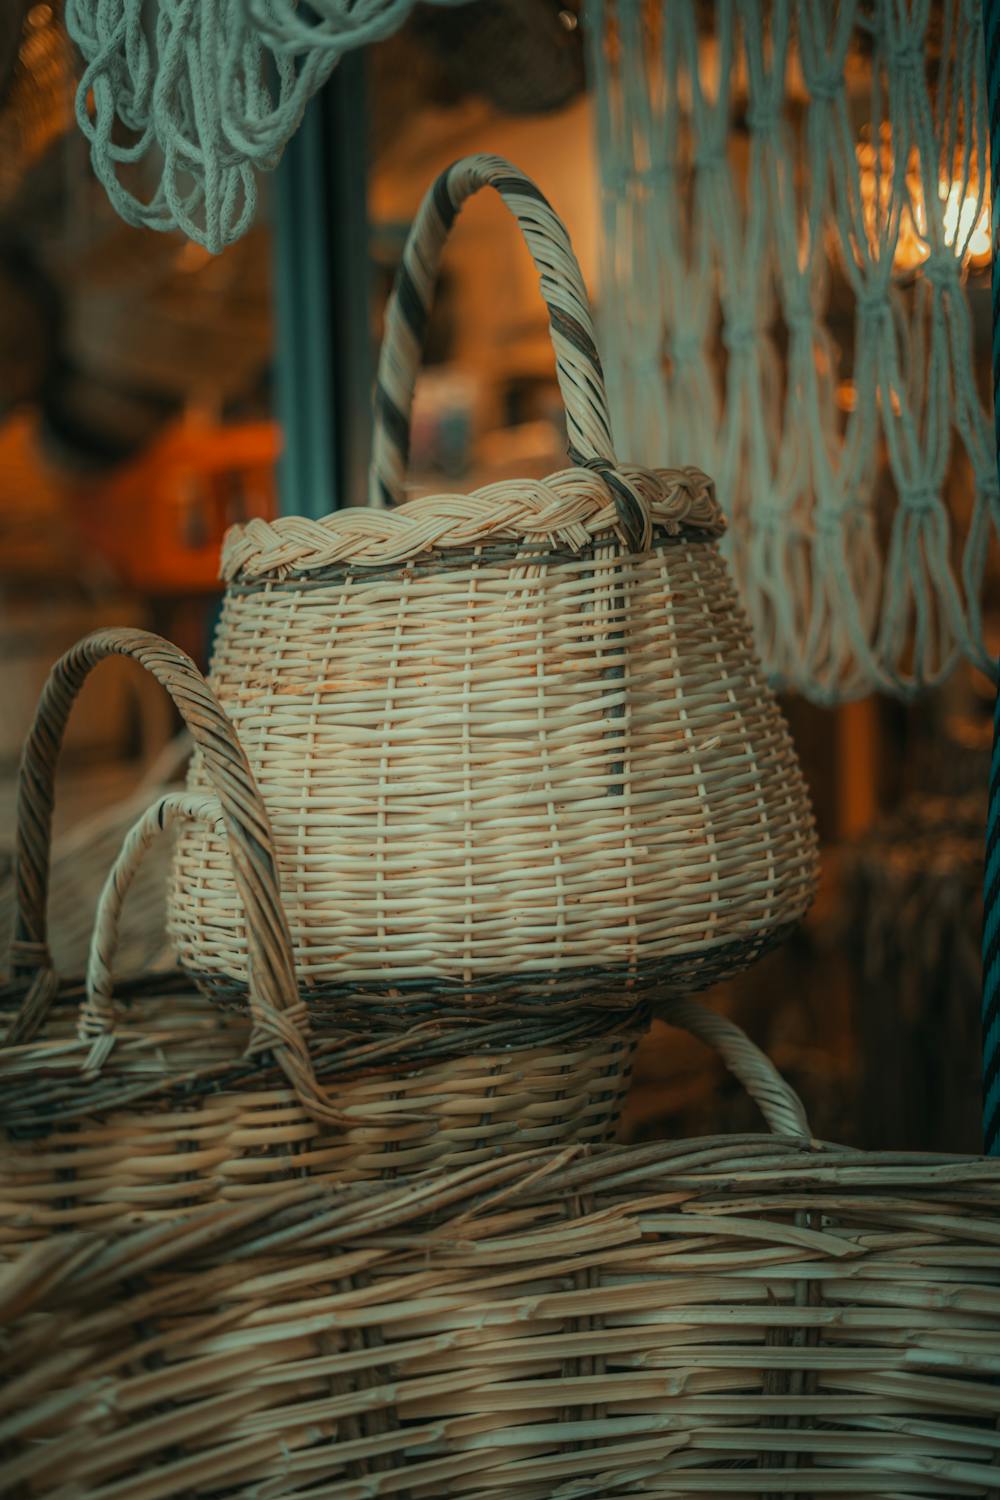 Wicker Baskets on Market Stall · Free Stock Photo